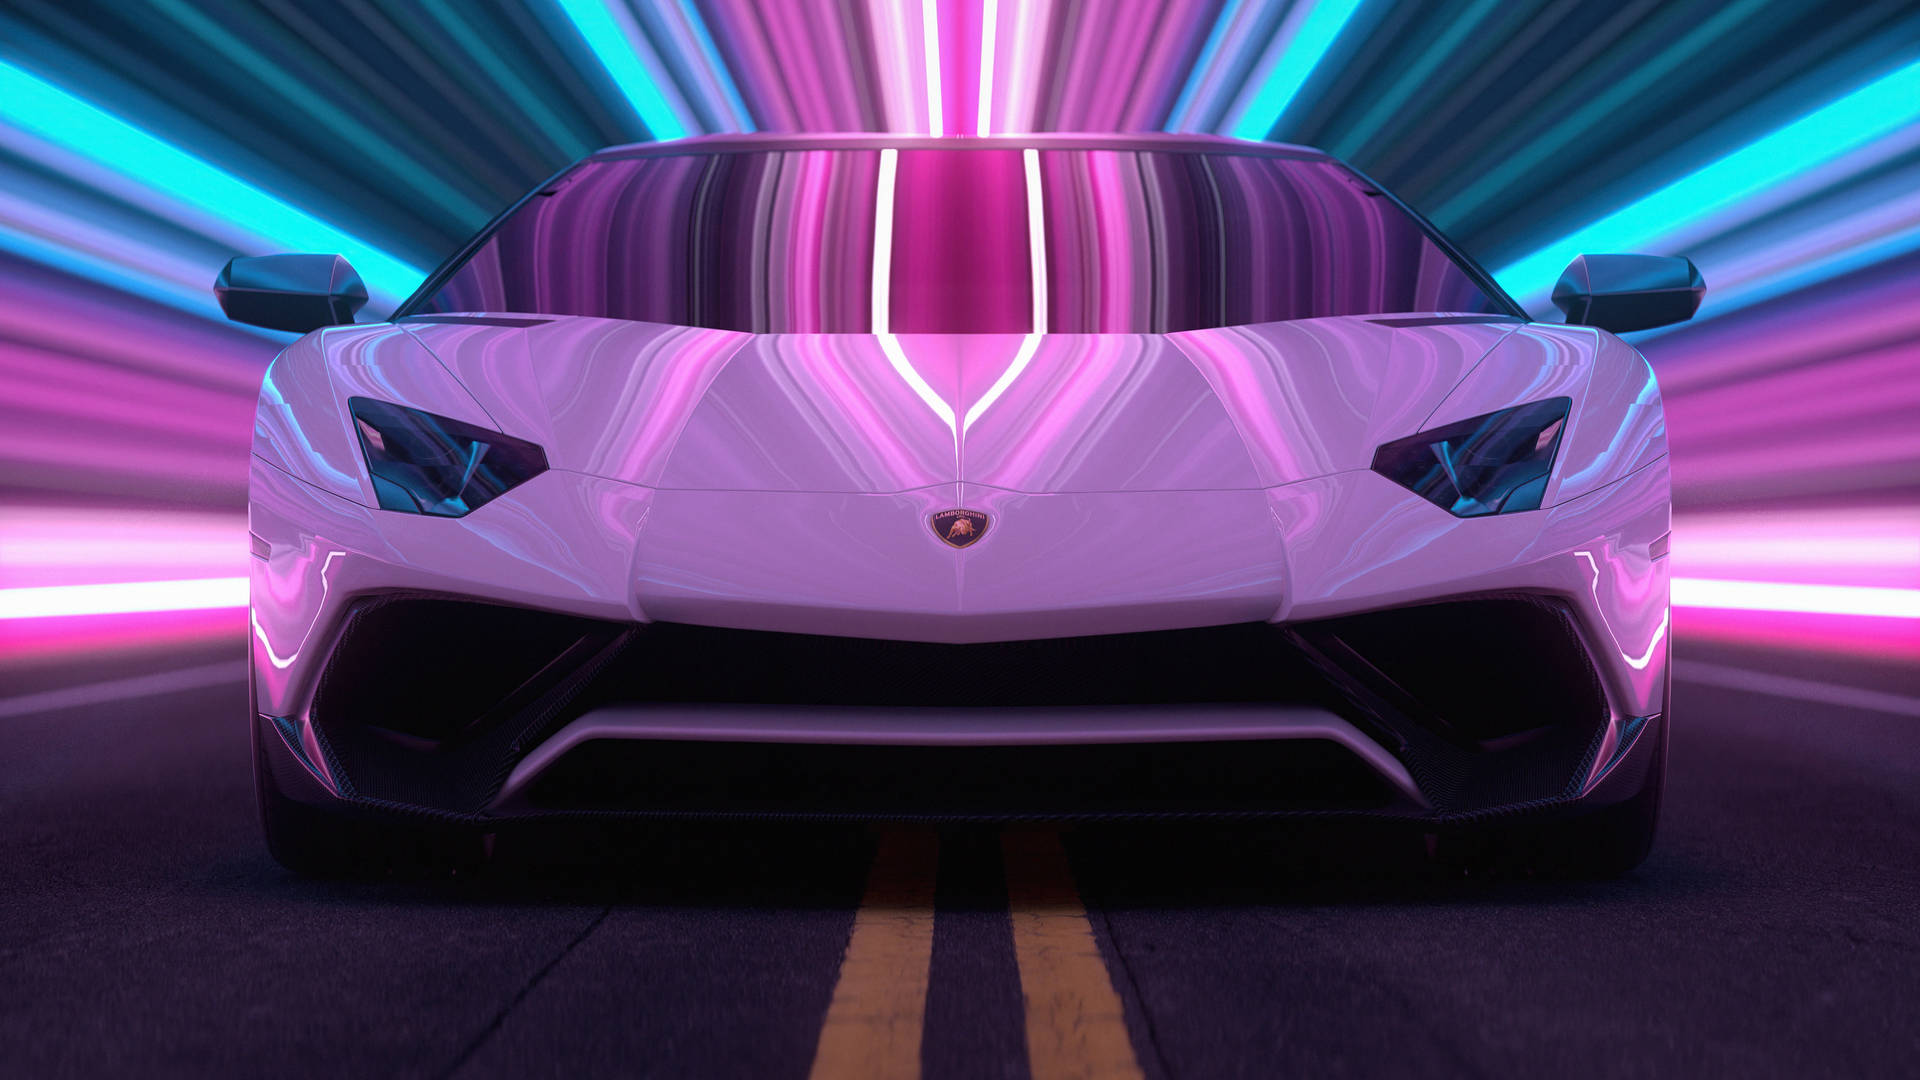 Majesty In Motion - A Lamborghini In Stunning 4k Wallpaper